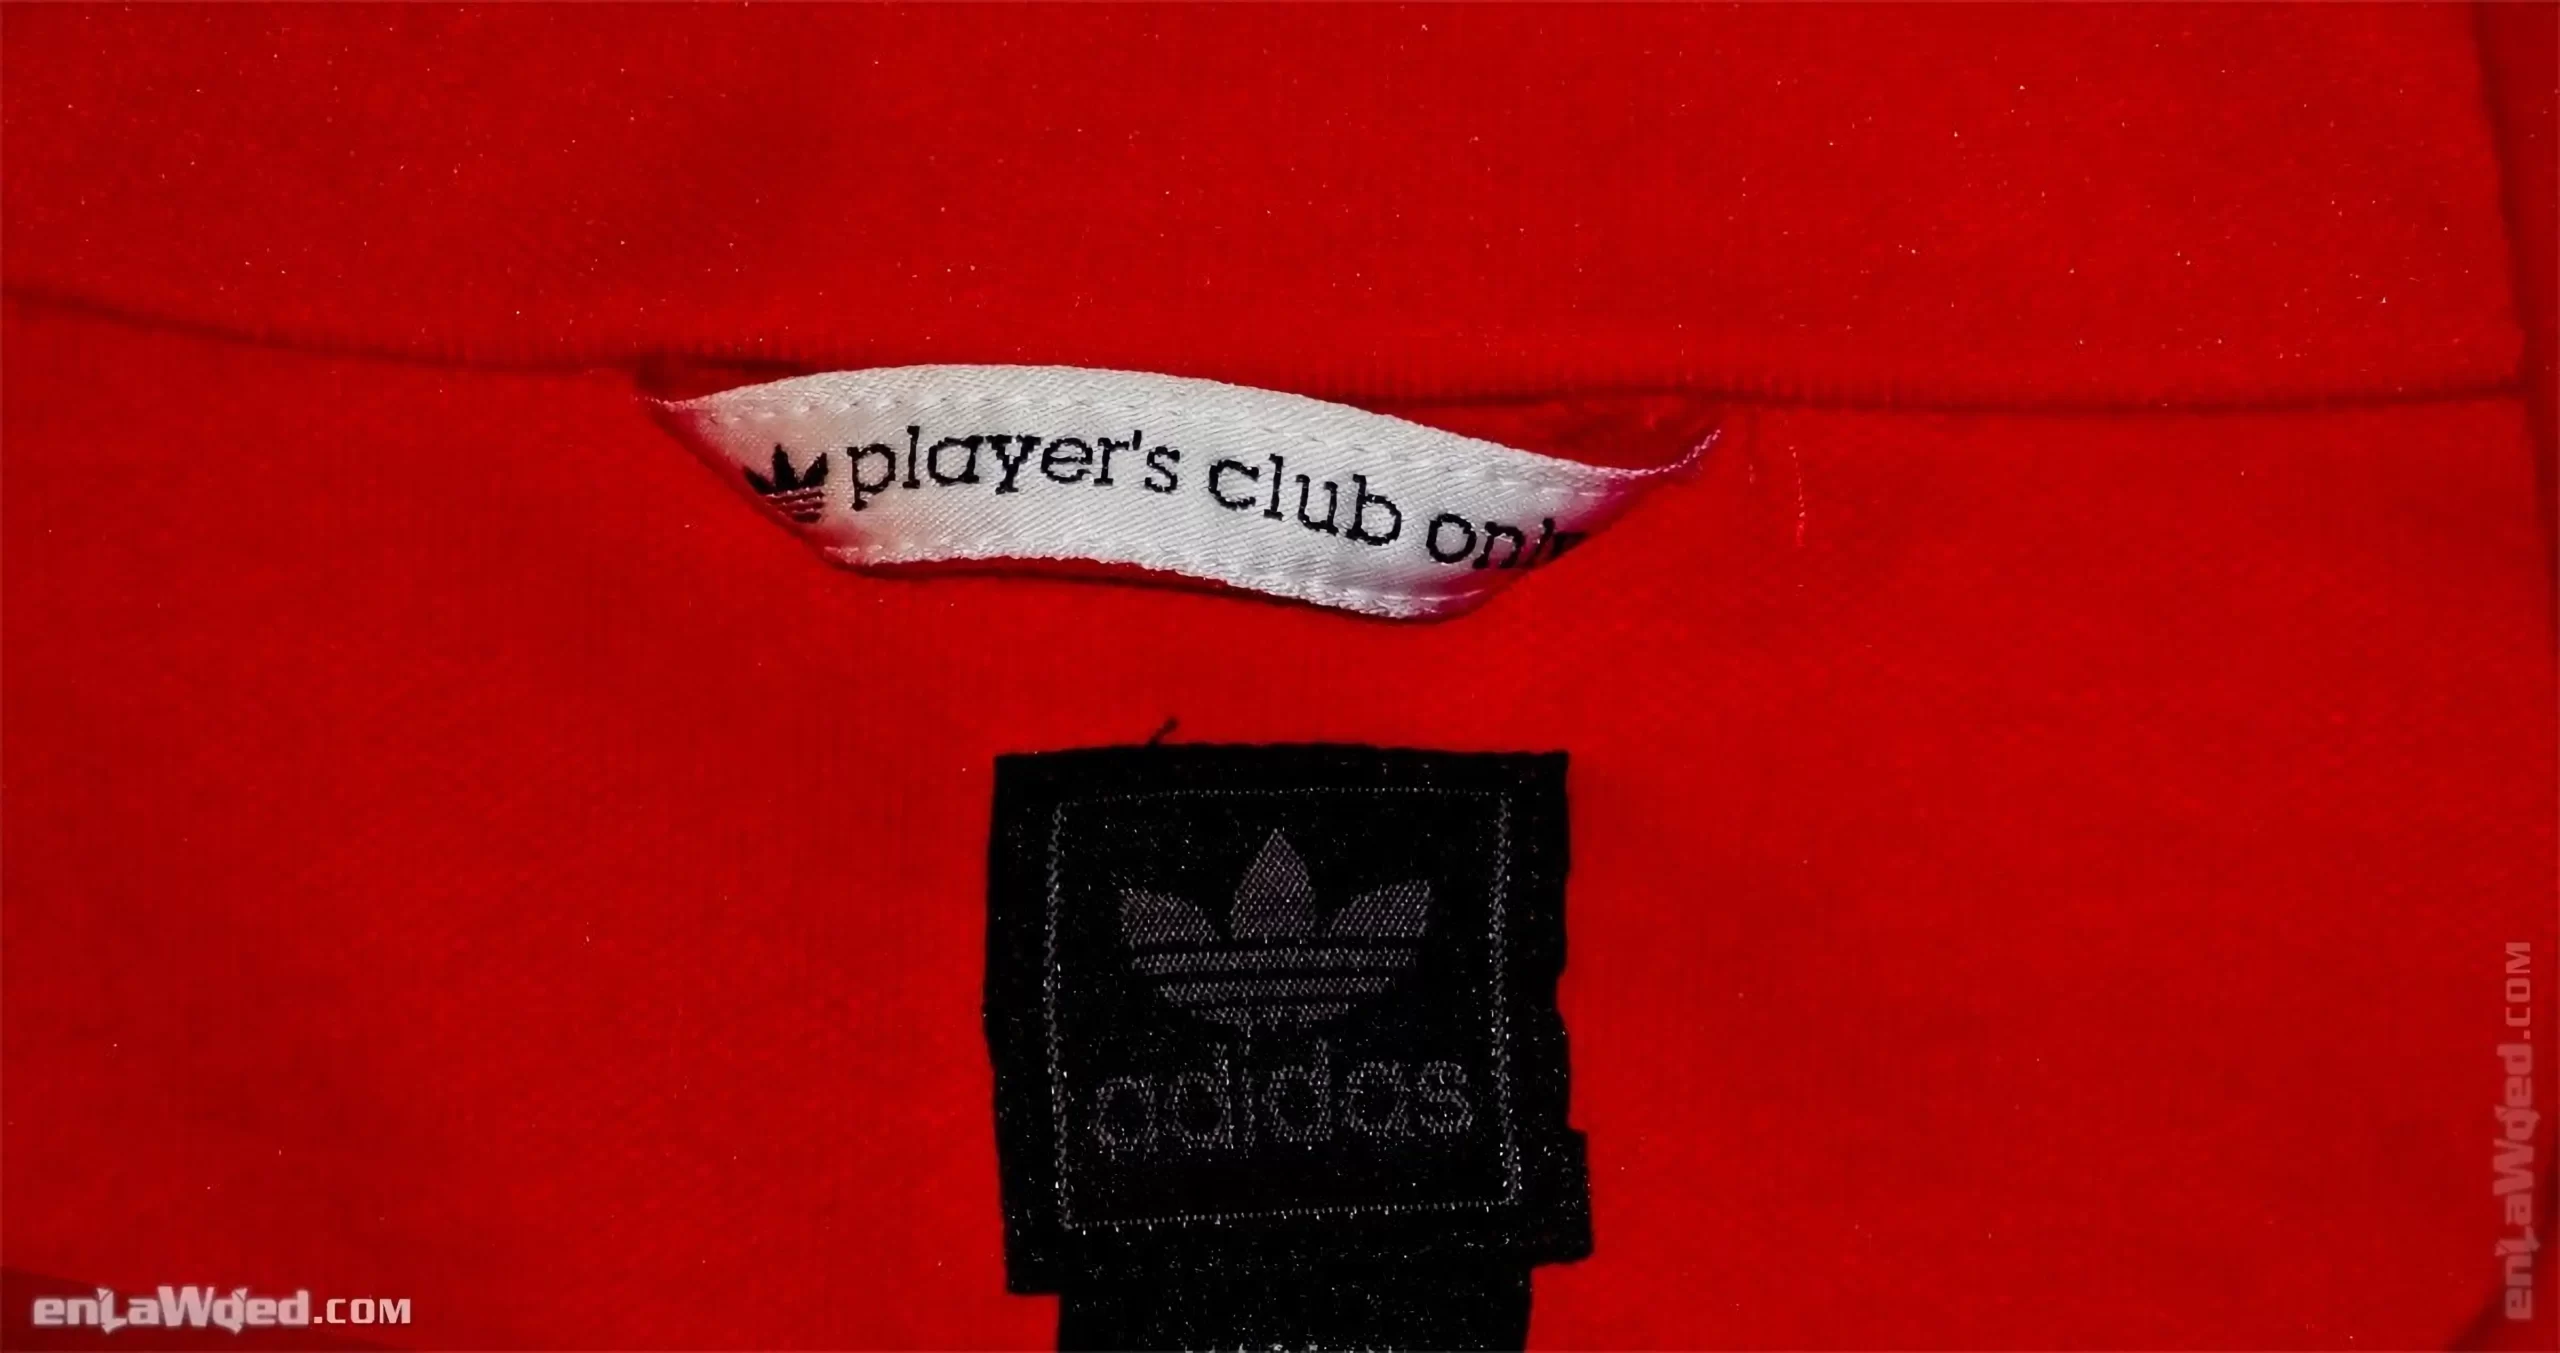 Men's 2006 James Hunt Player's Club TT by Adidas: Sexy (EnLawded.com file #lmchk90293ip2y124296kg9st)